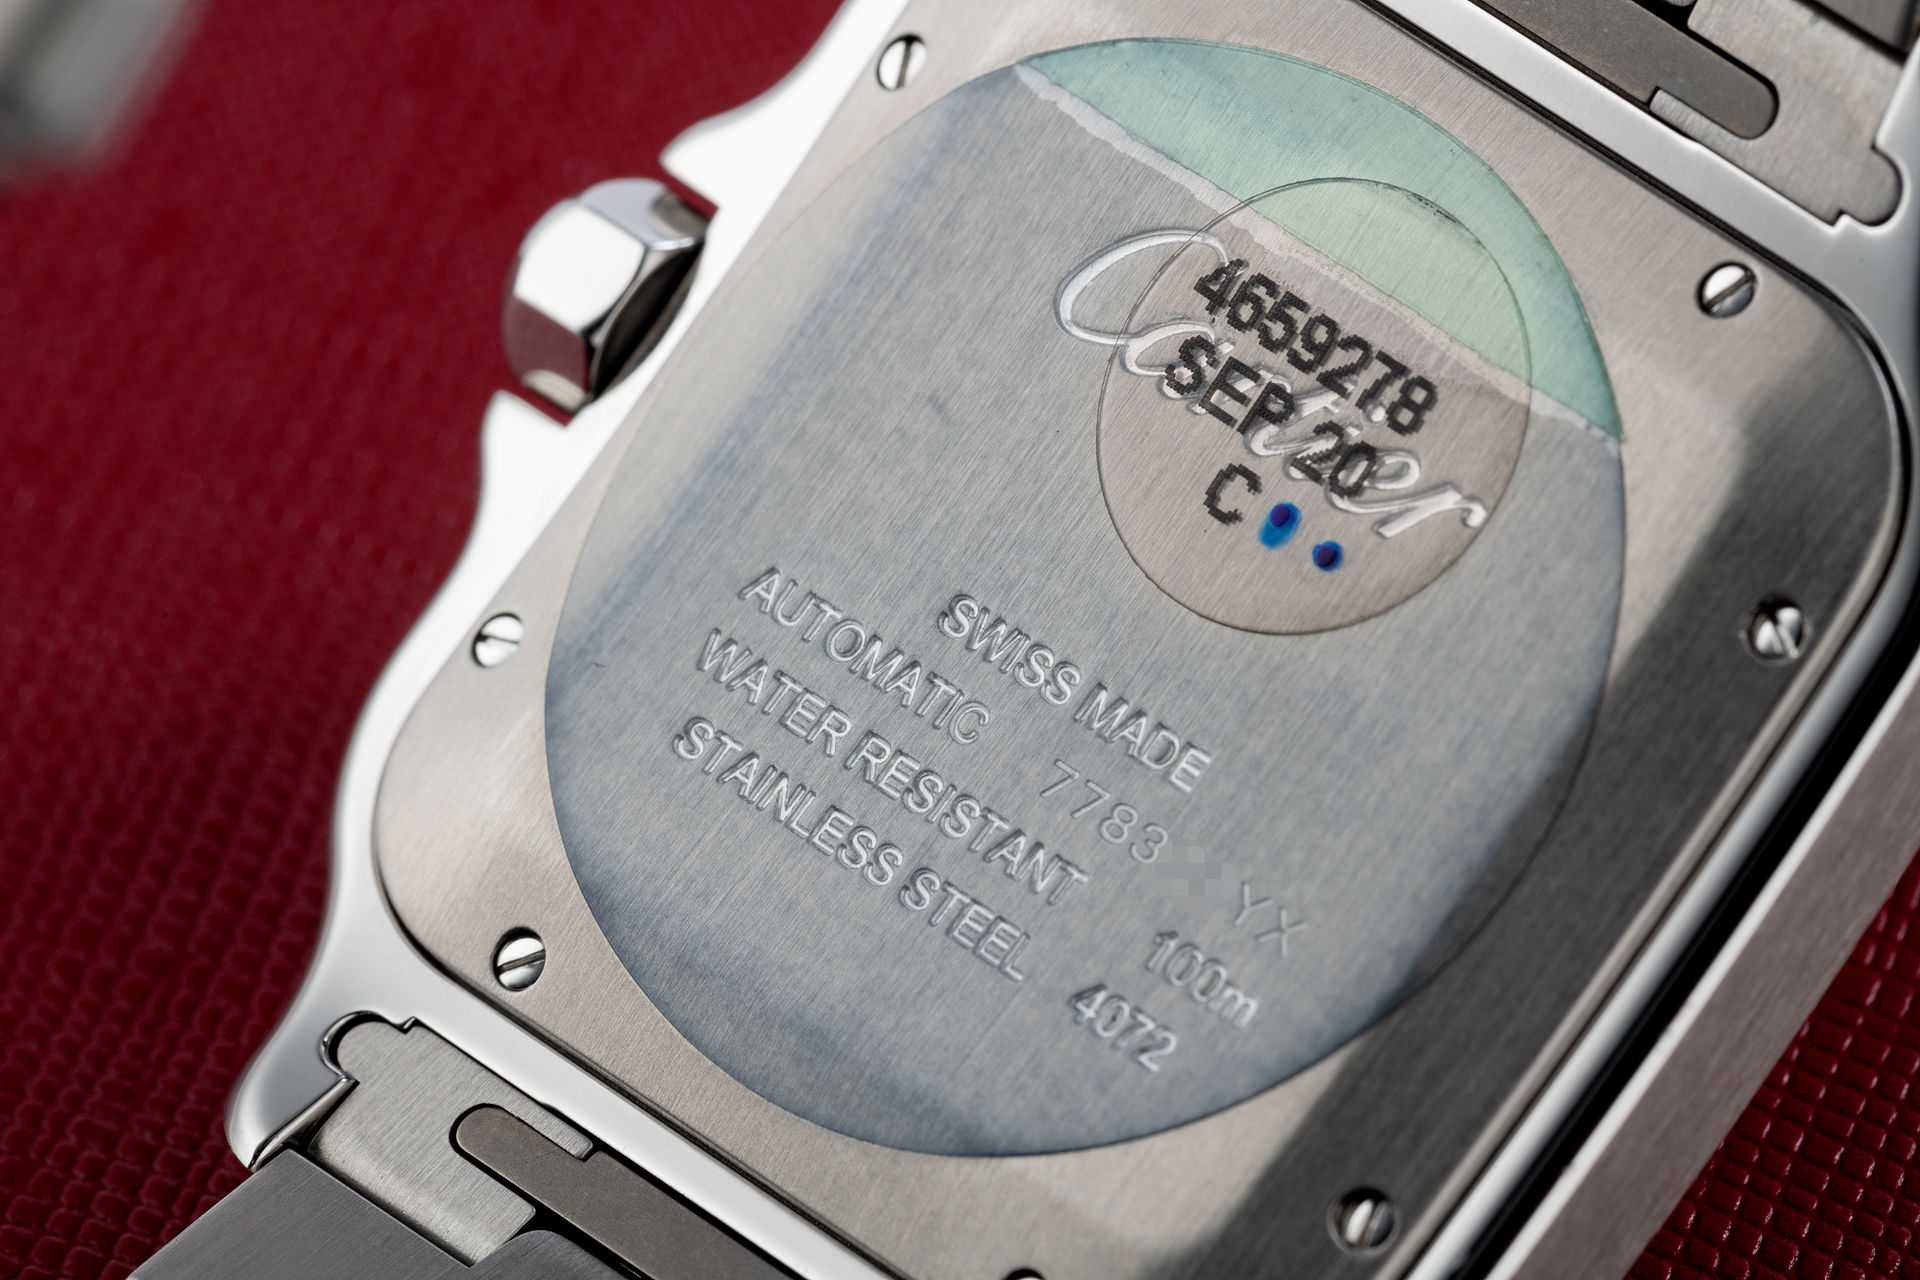 ref W2SA0006 | Brand New & Fully Stickered | Cartier Santos 